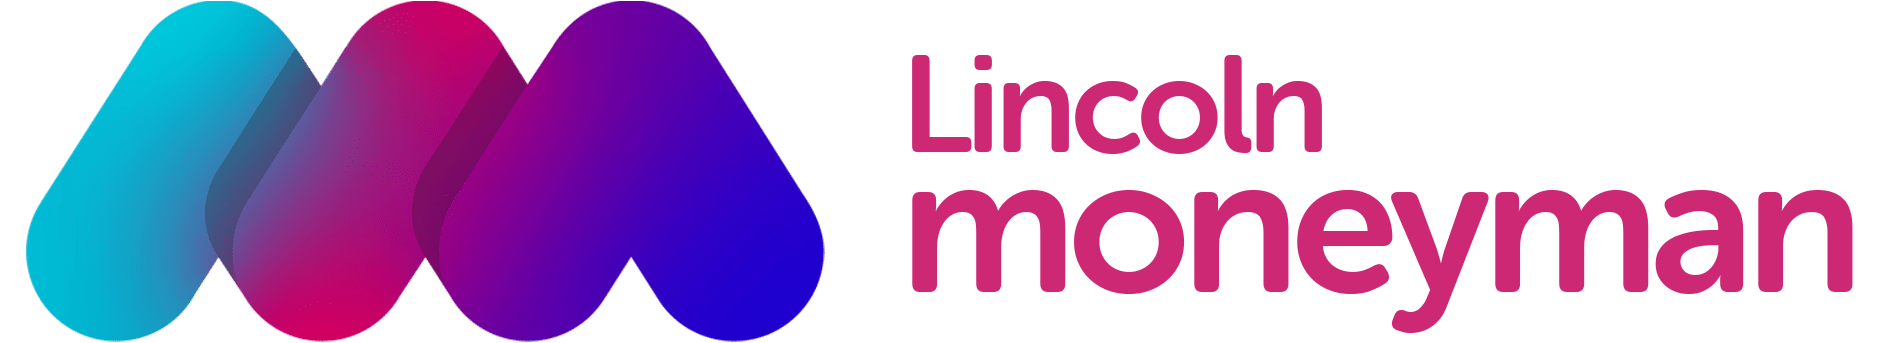 Mortgage Broker in Lincoln - Lincolnmoneyman